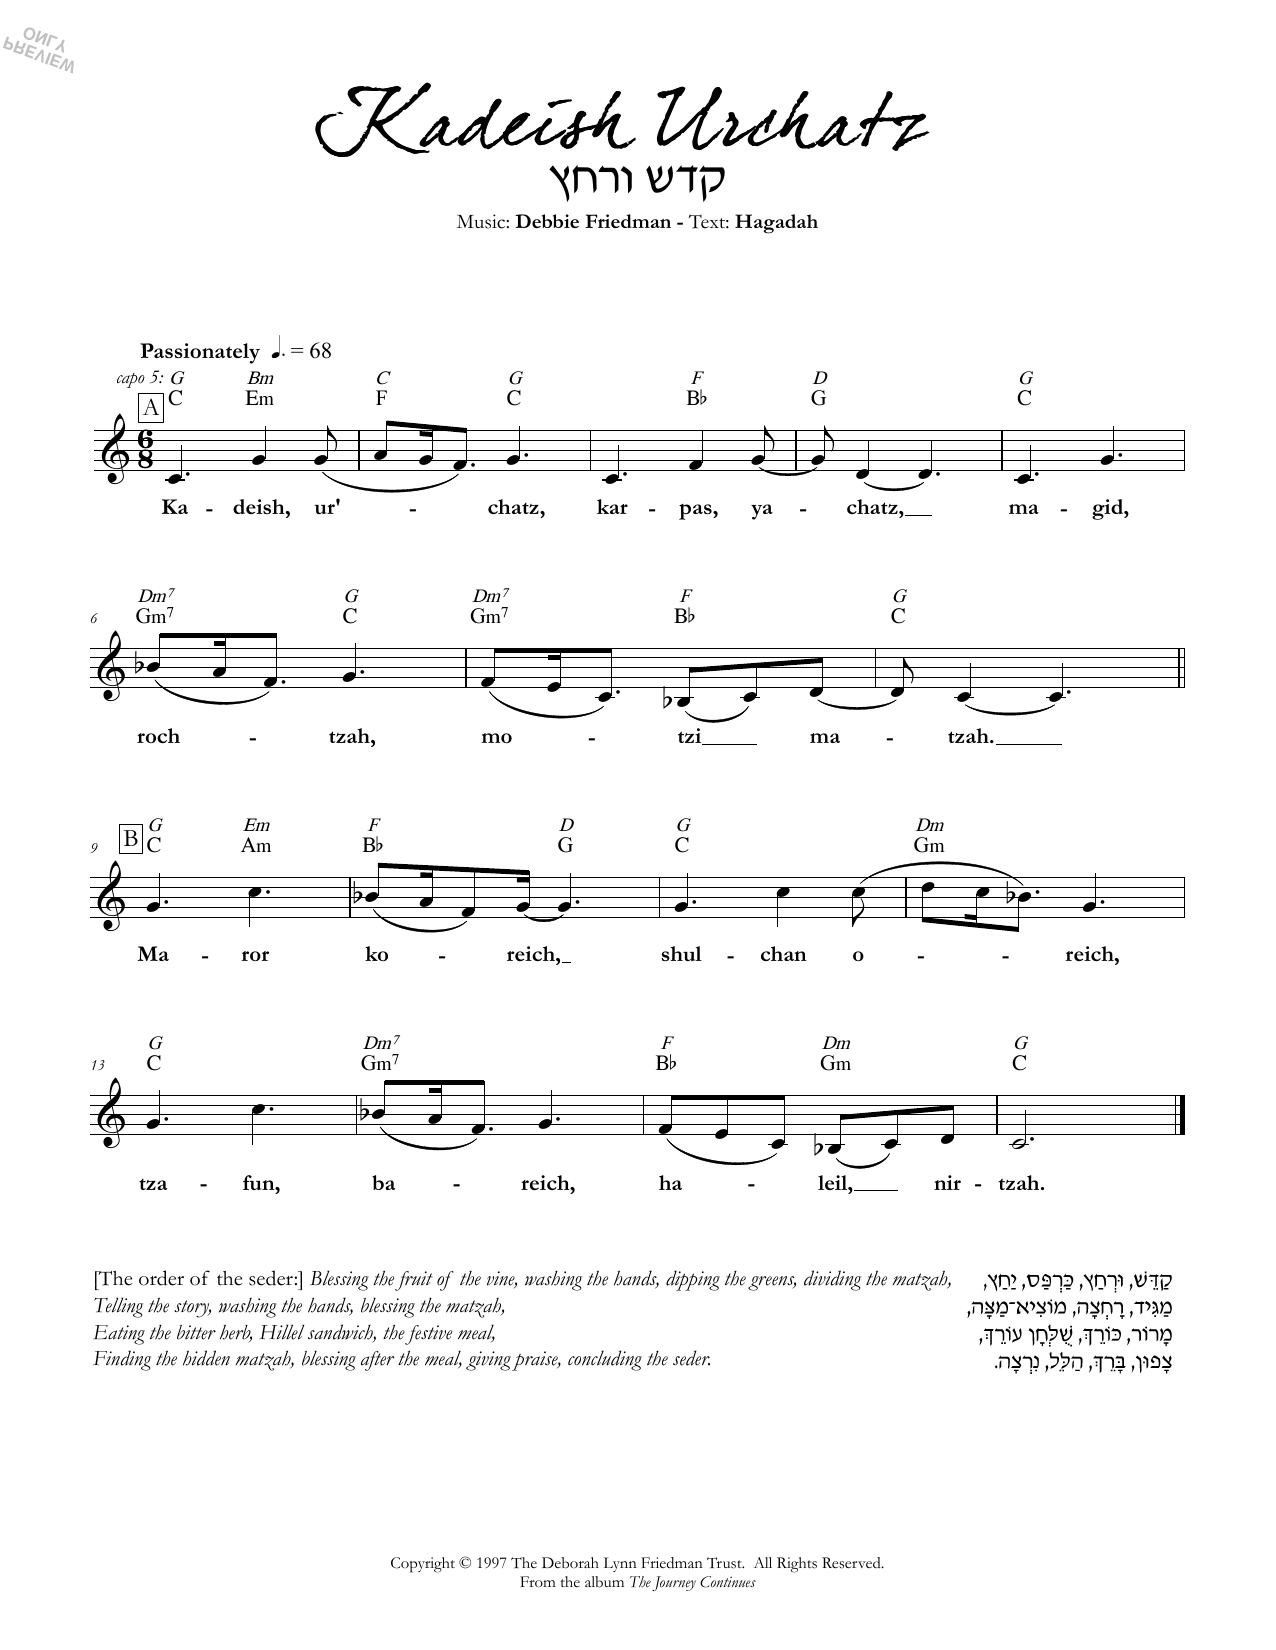 Debbie Friedman Kadeish Urchatz Sheet Music Notes & Chords for Lead Sheet / Fake Book - Download or Print PDF